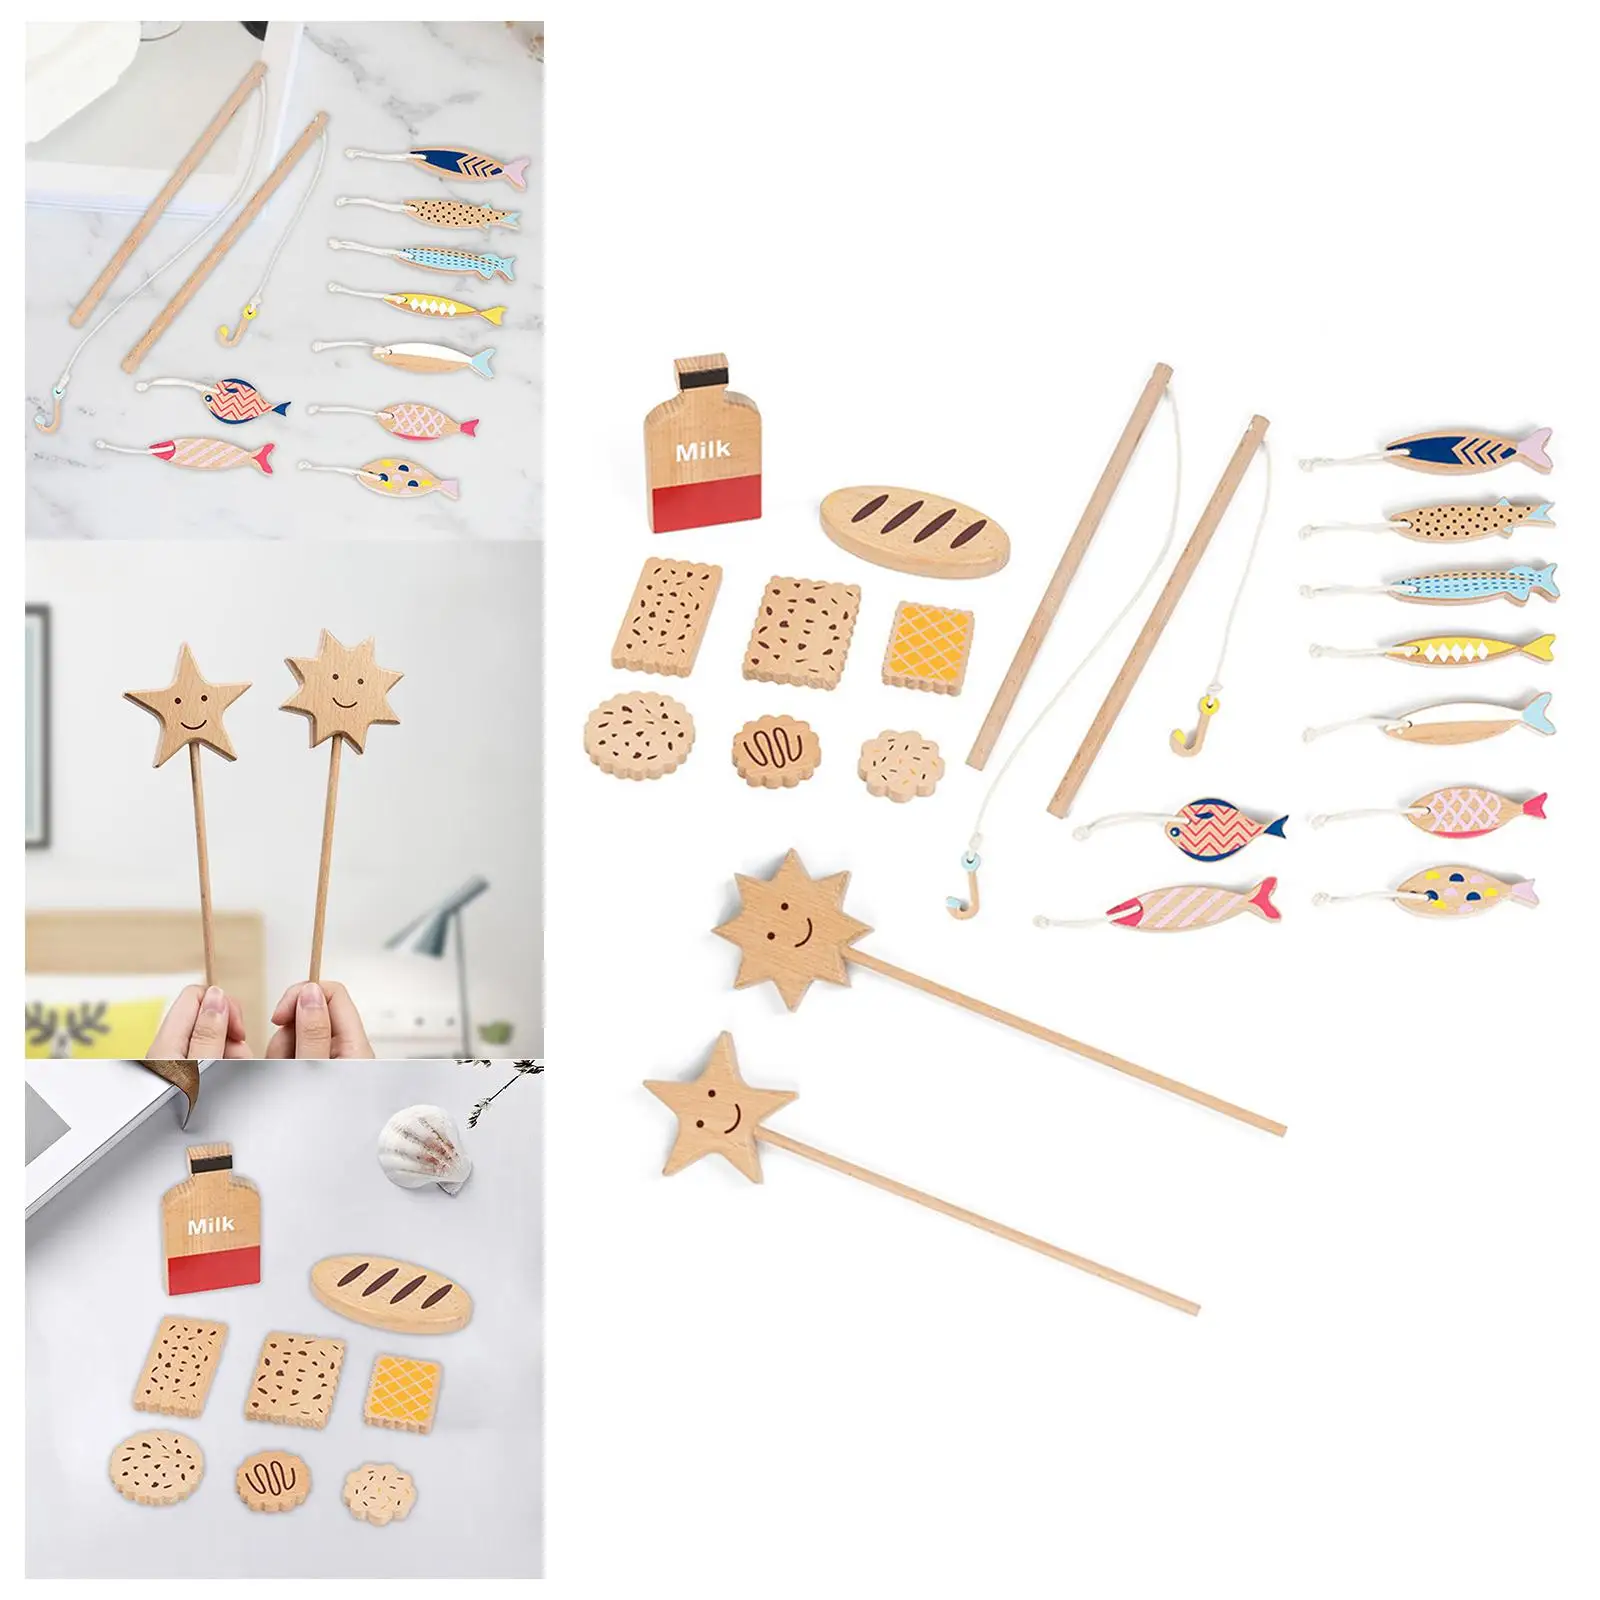 Pretend Wooden Handicraft Toy Activities for Children Boys Girls Favors